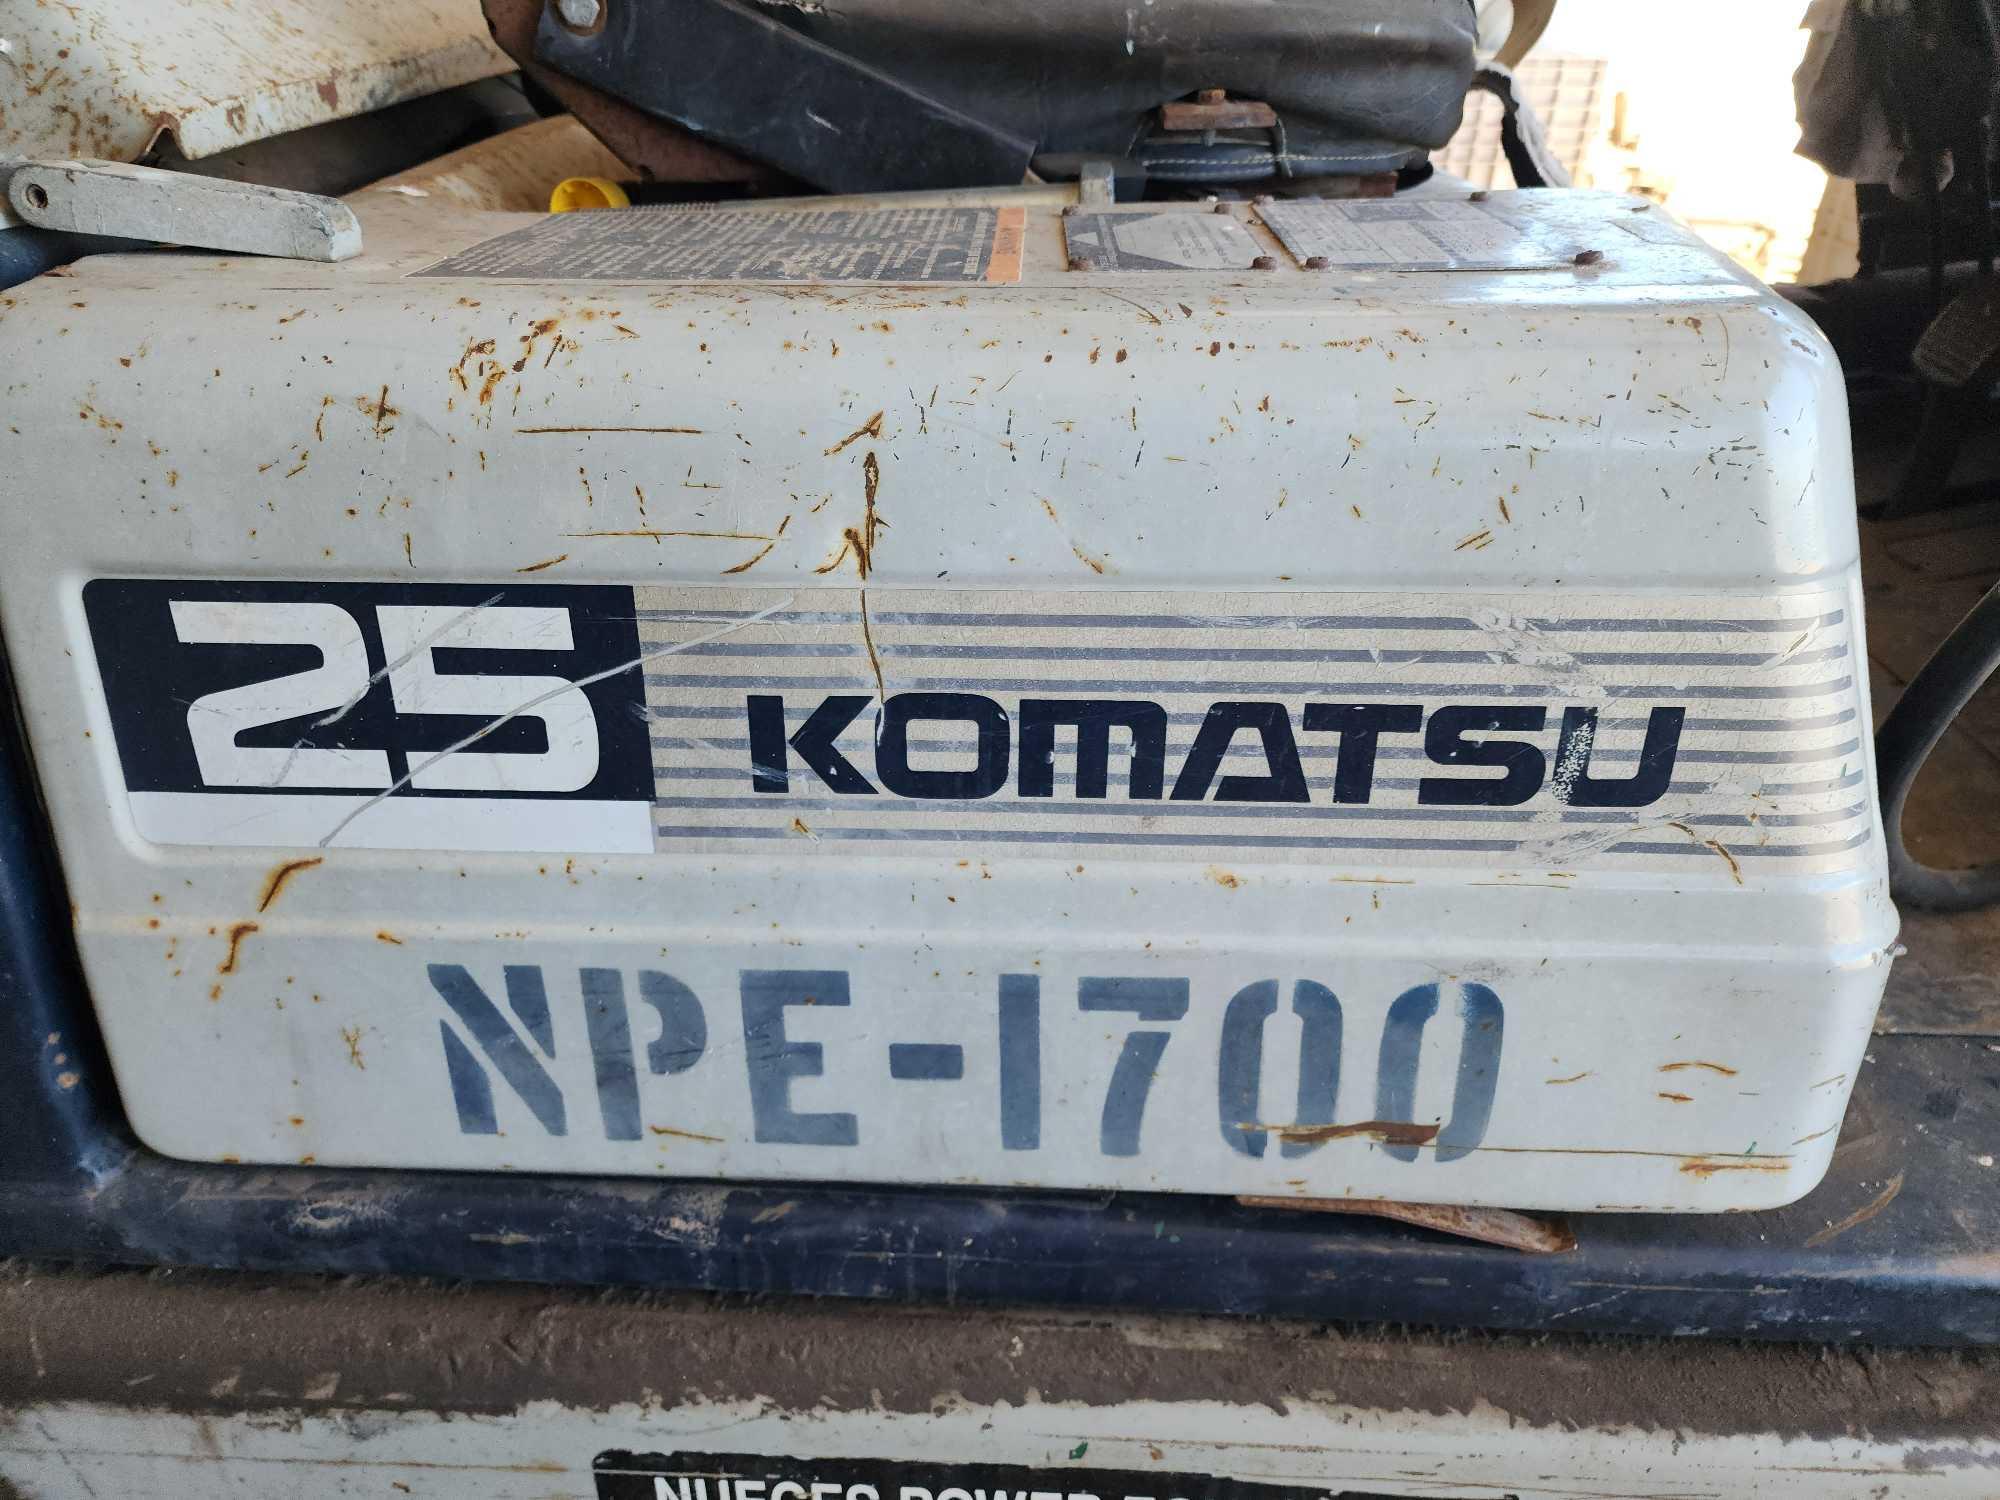 Komatsu 25 Forklift...Hours: 4623Model #FD25VT11...Serial #459604A